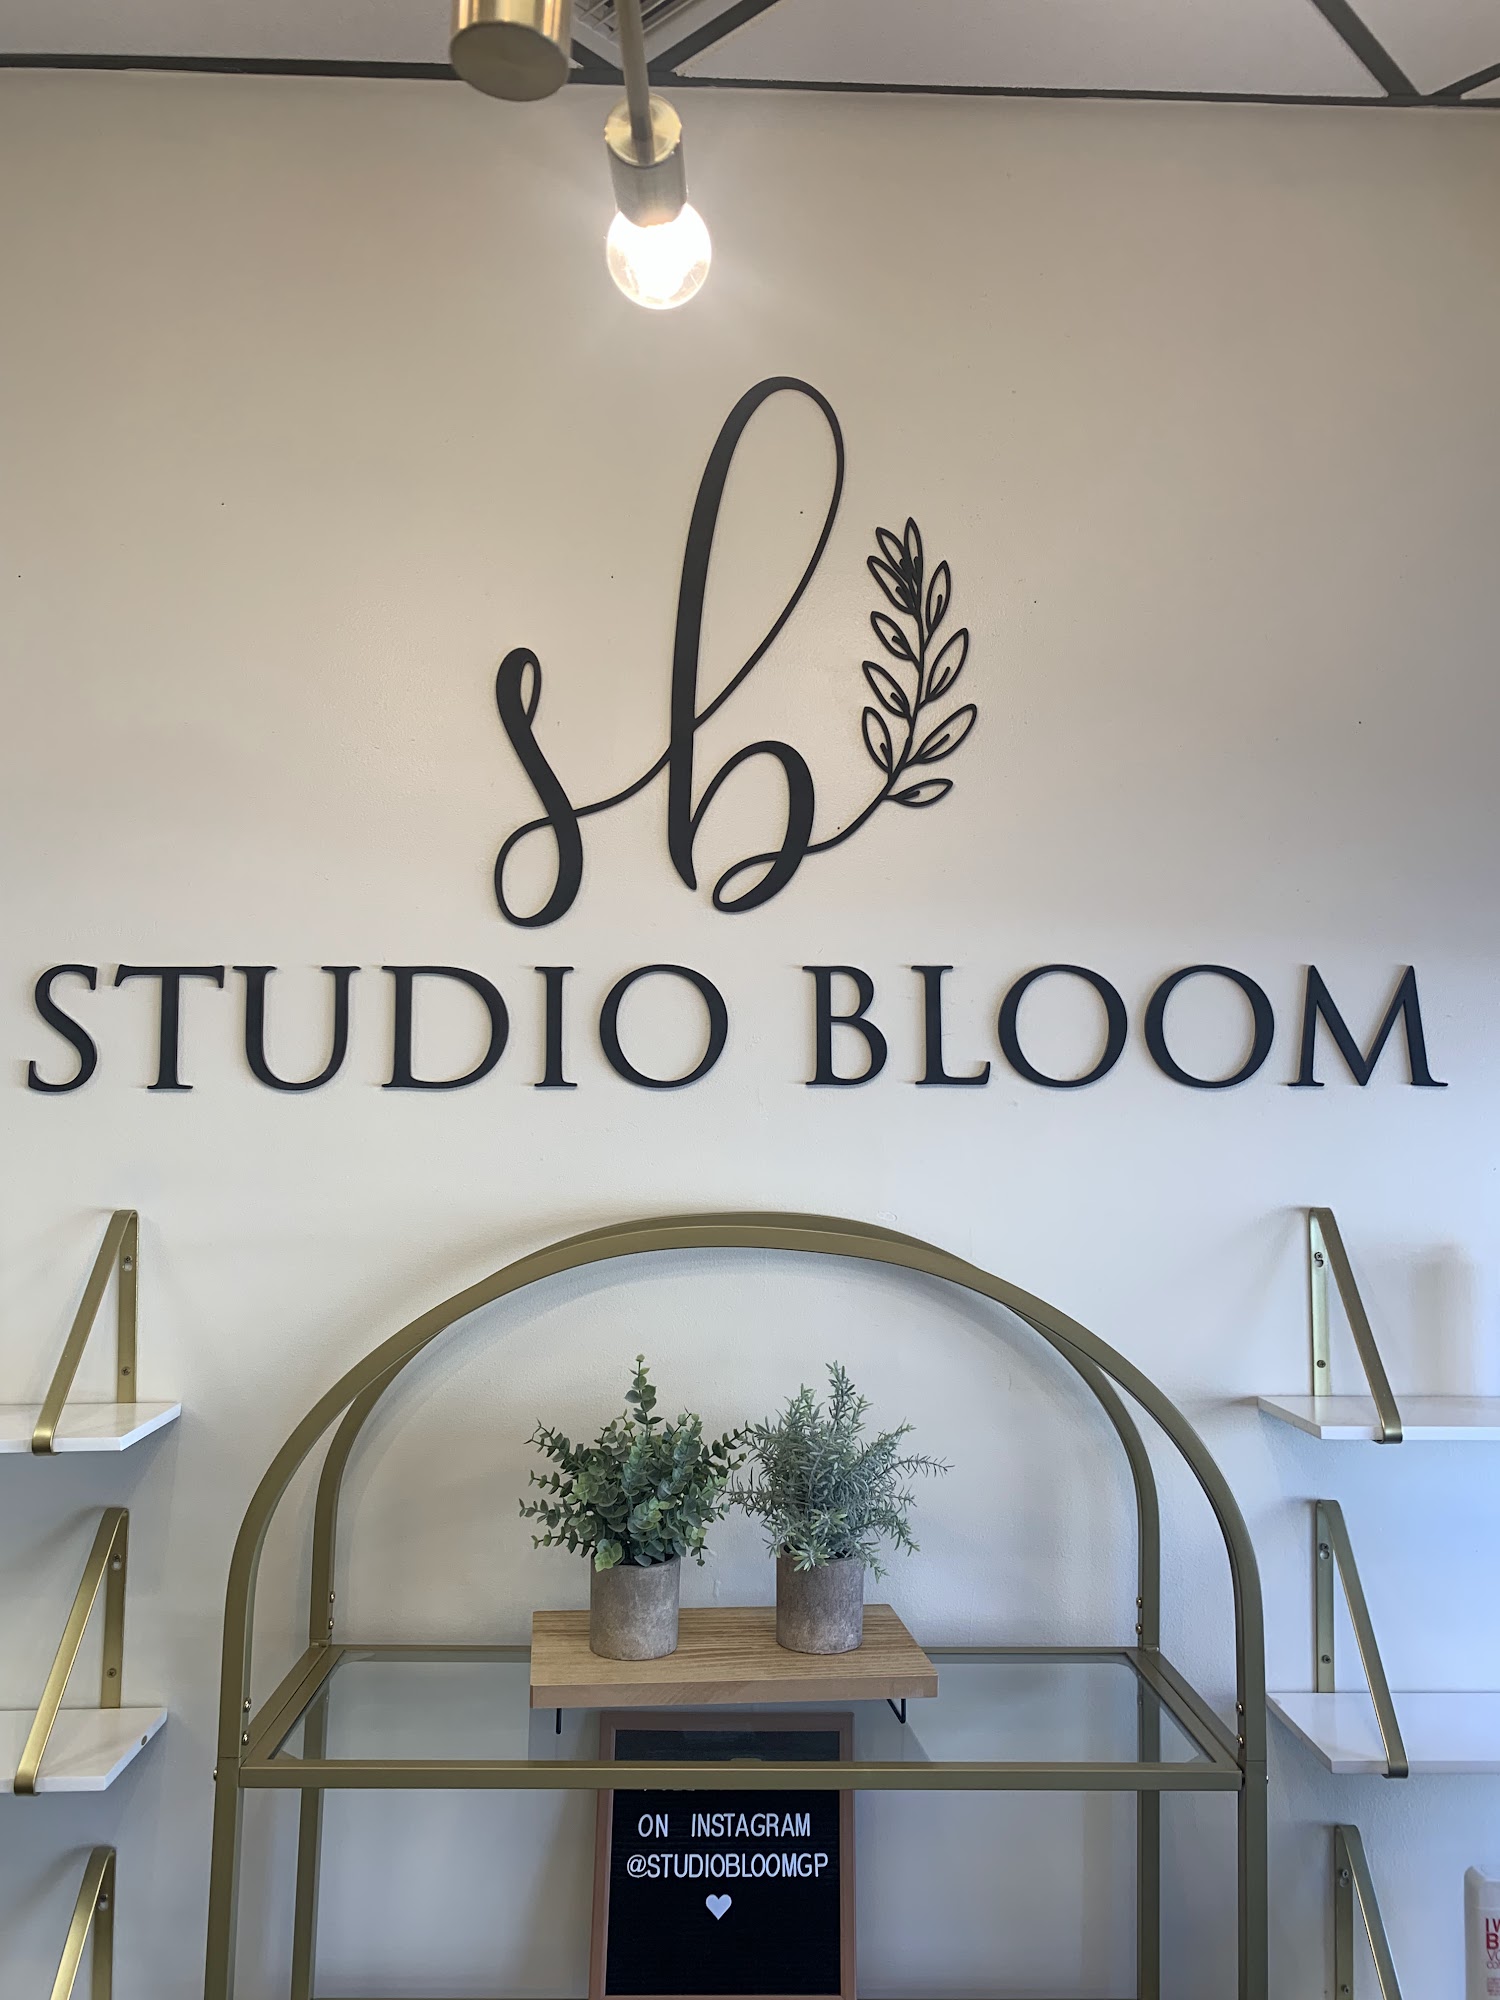 Studio Bloom 16824 Kercheval Ave suite 101, Grosse Pointe Michigan 48230